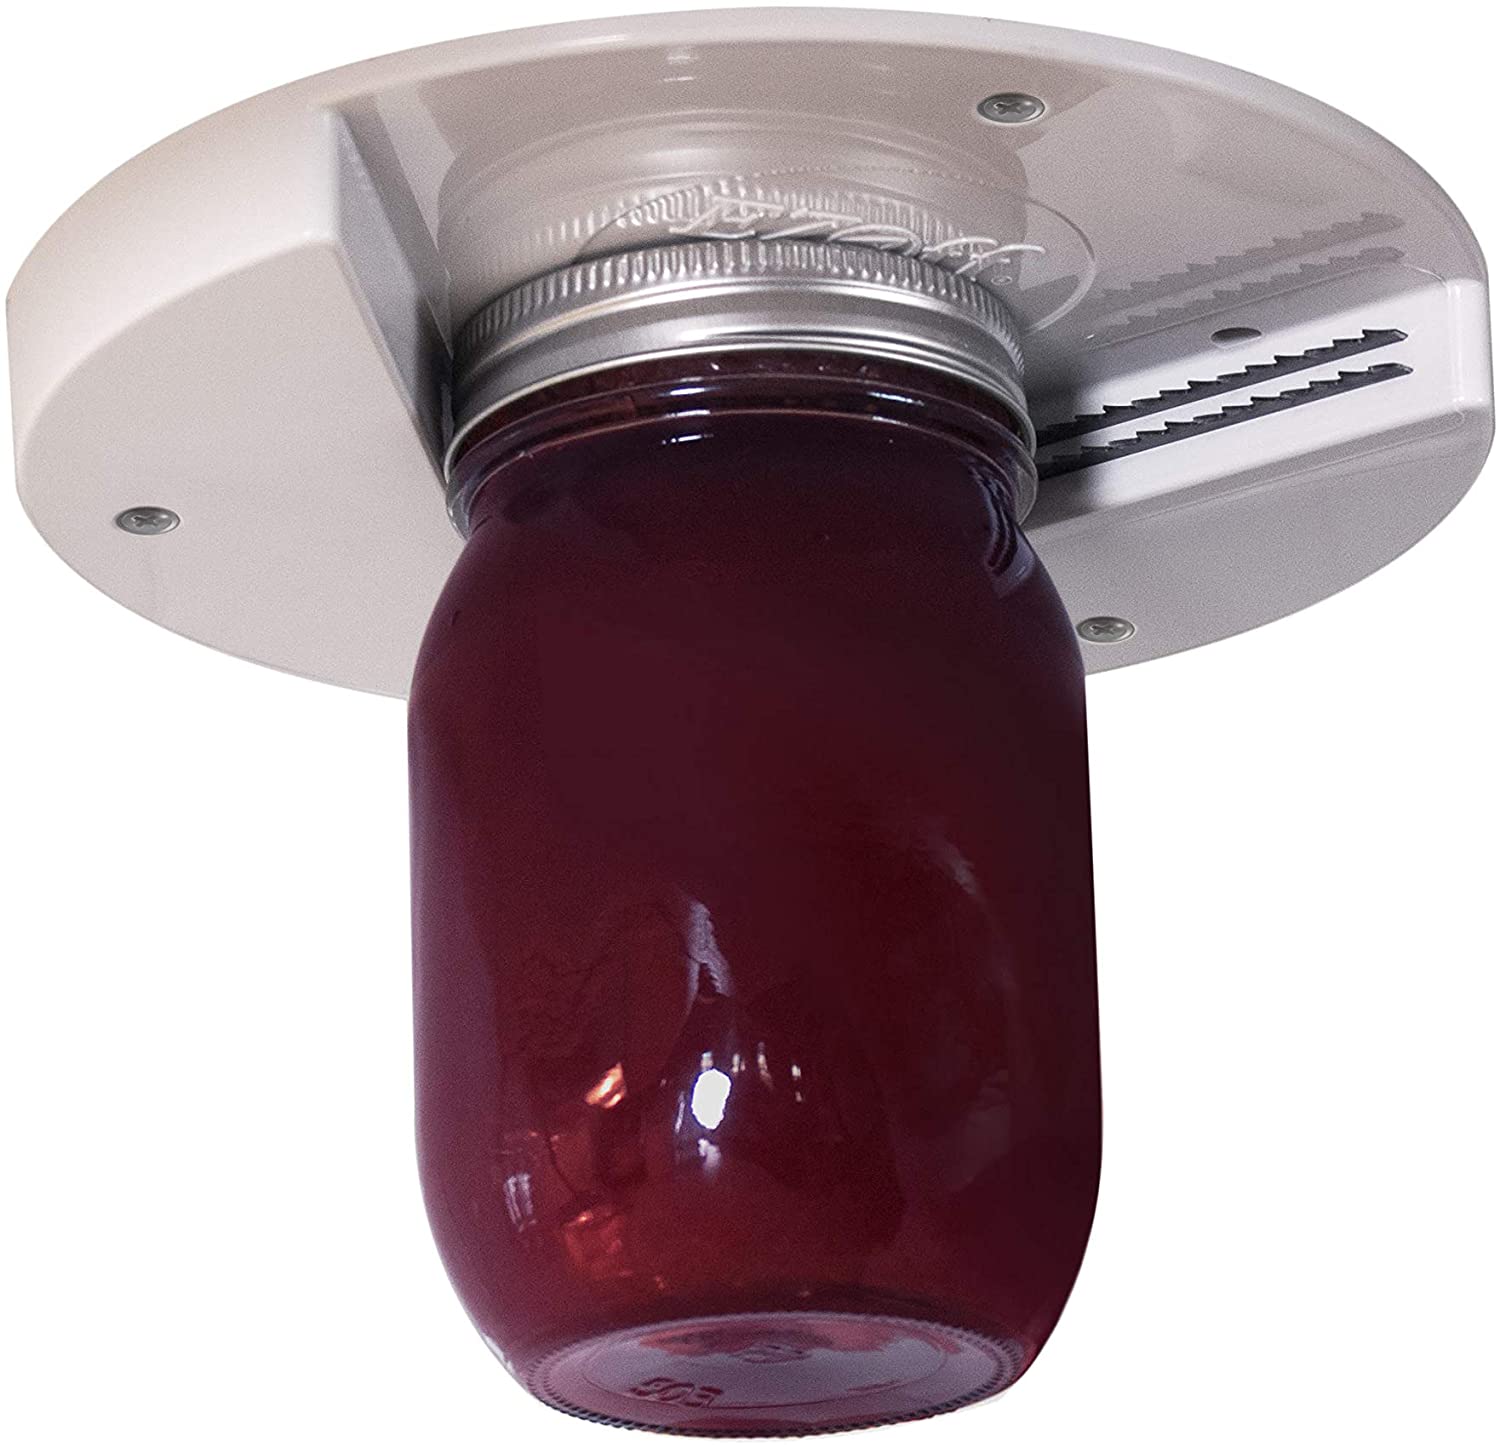 Kichwit Jar Opener Stainless Steel Bottle Opener Keychain Included